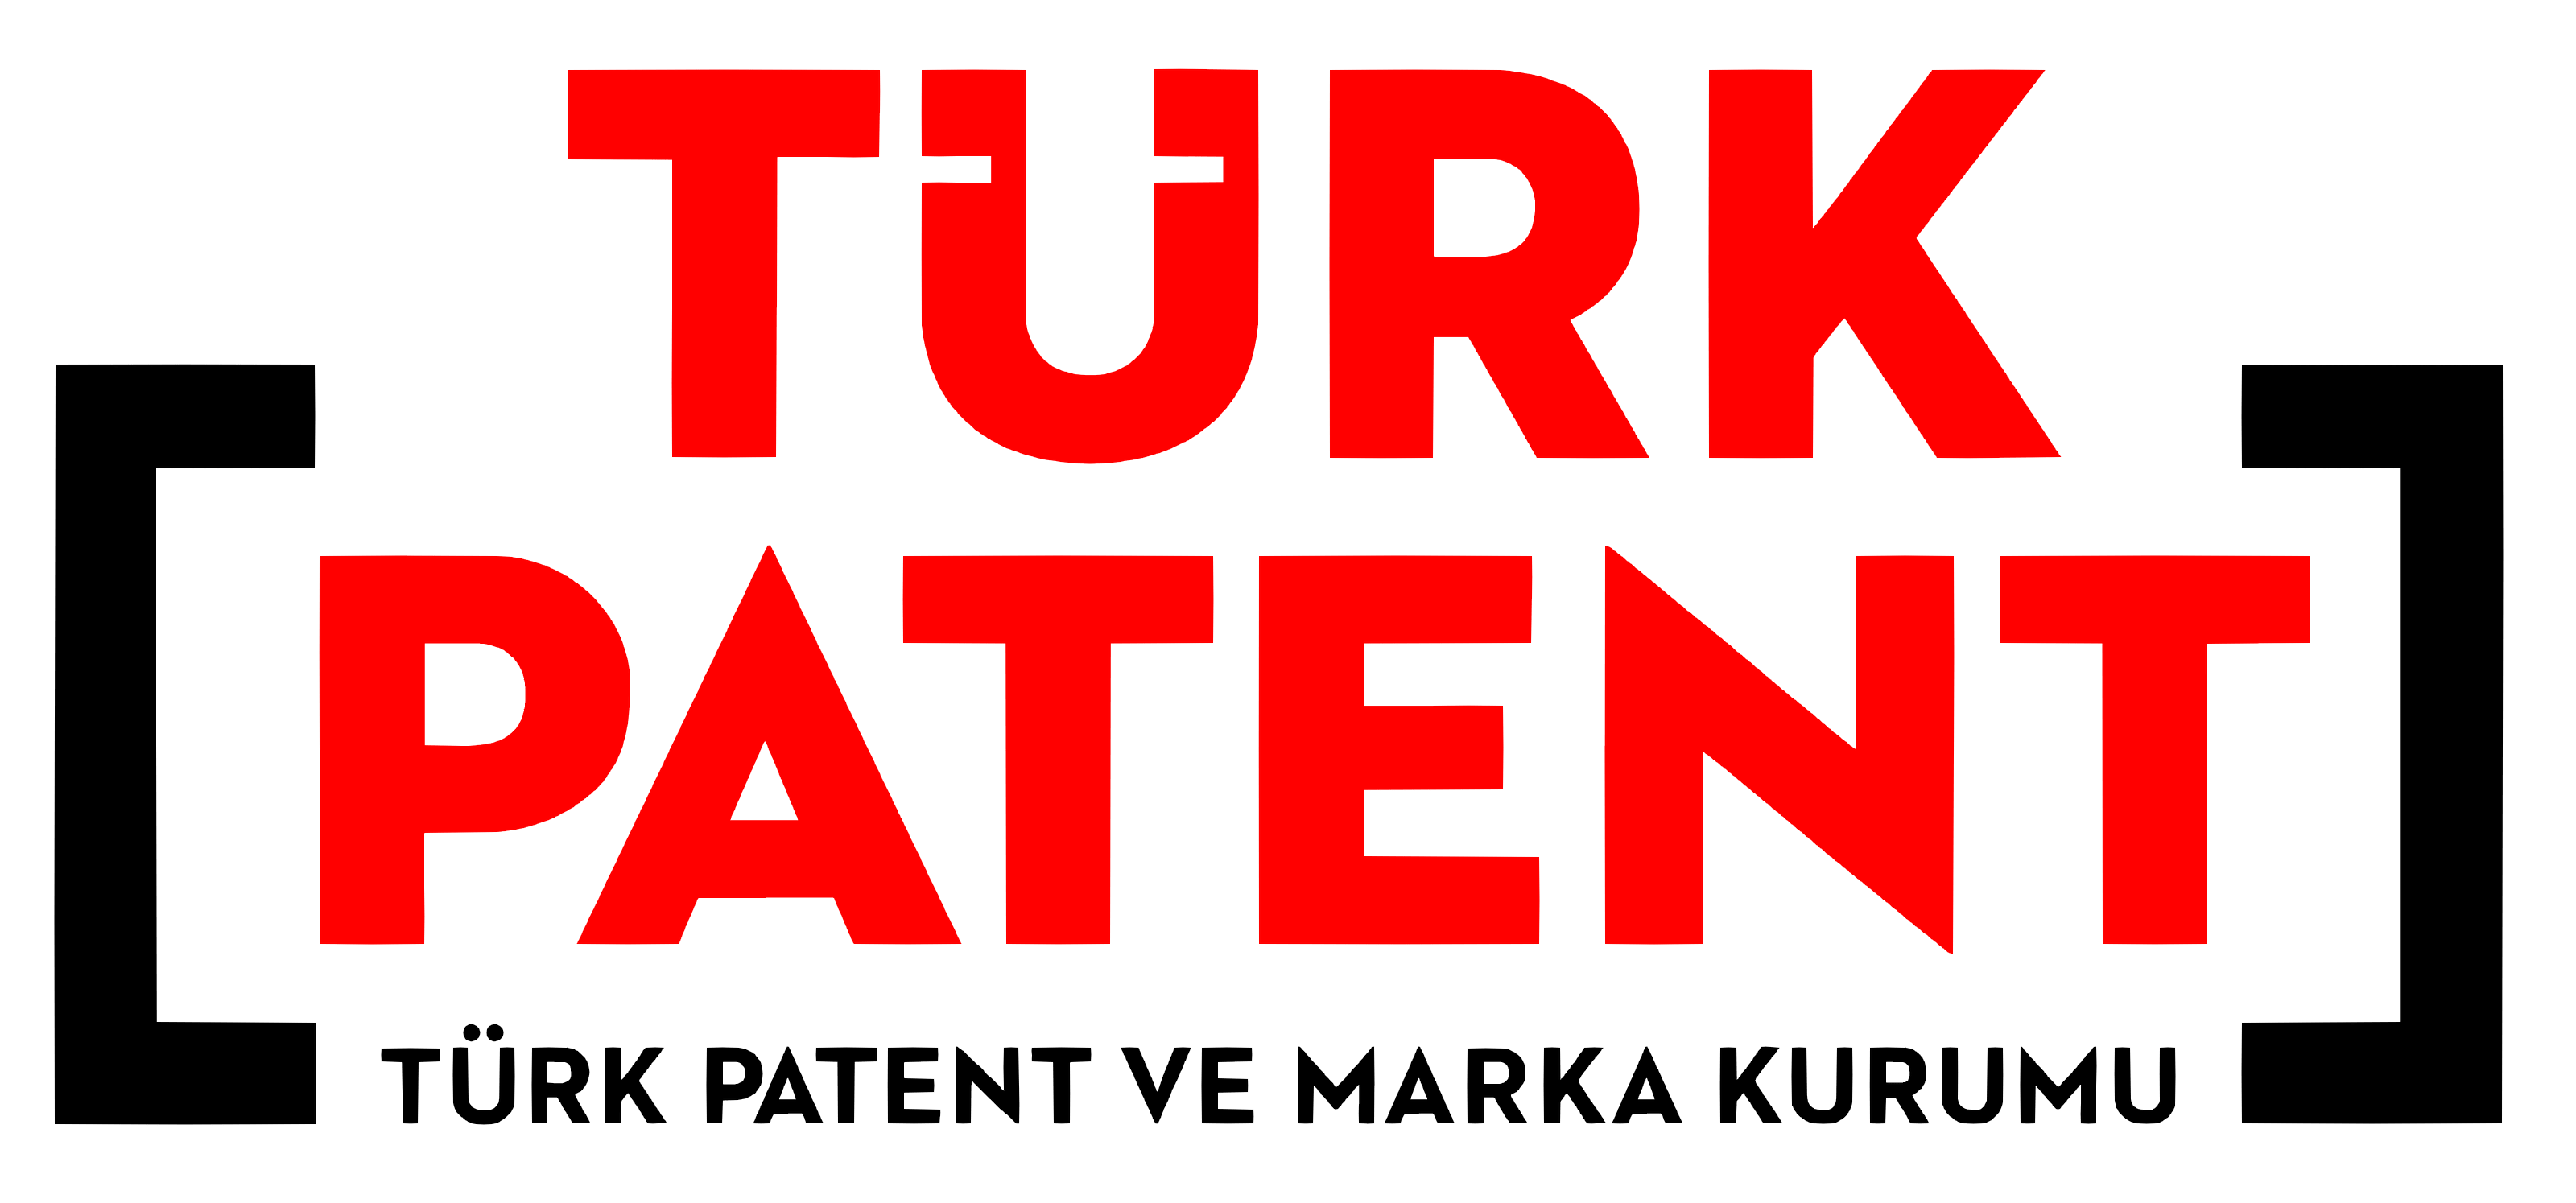 Türk Patent ve Marka Kurumu Logo png